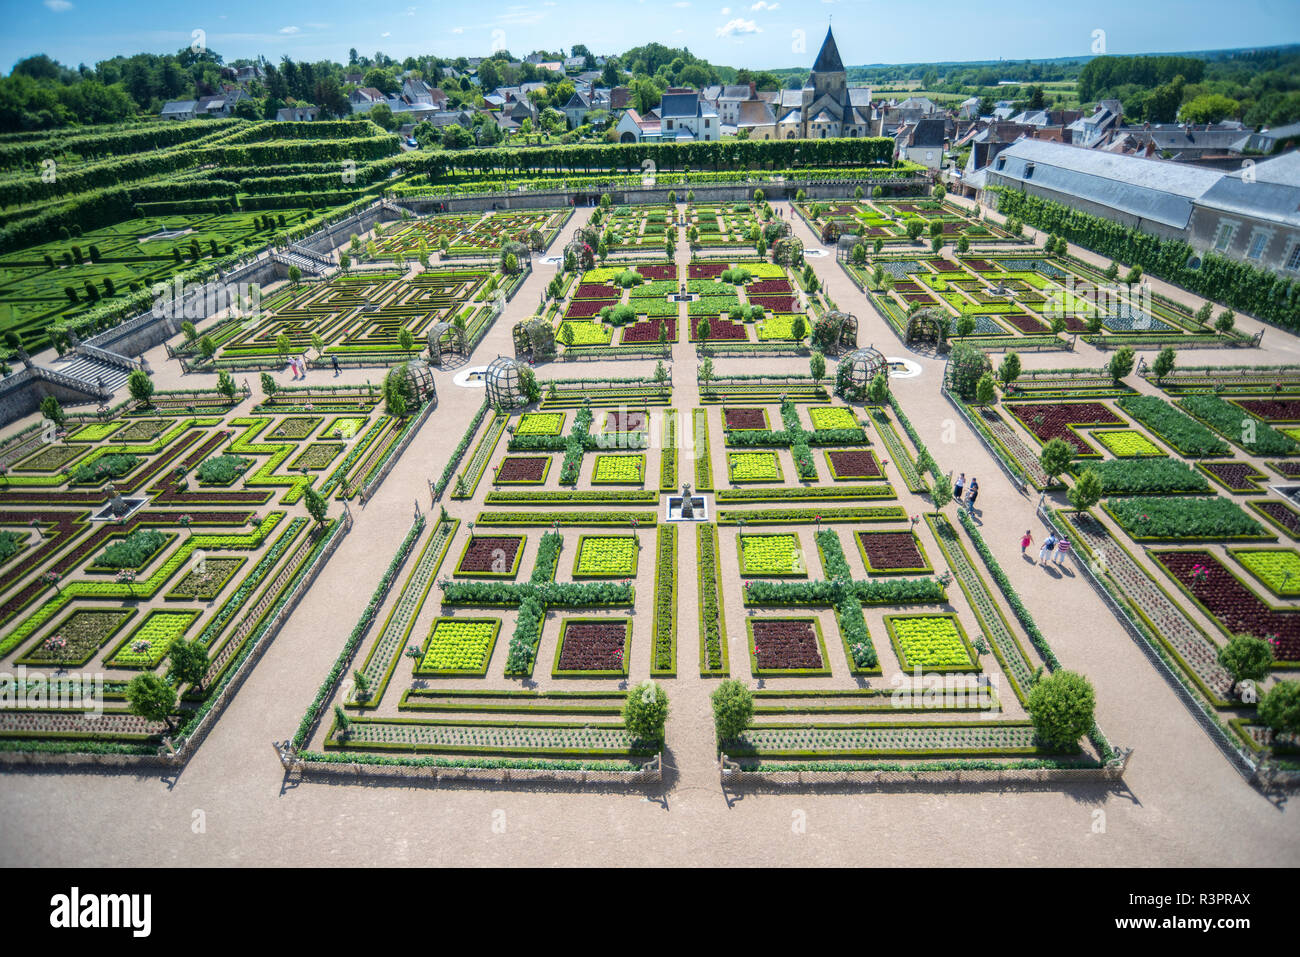 Kitchen garden, Chateau de Villandry, Loire Valley, France Stock Photo